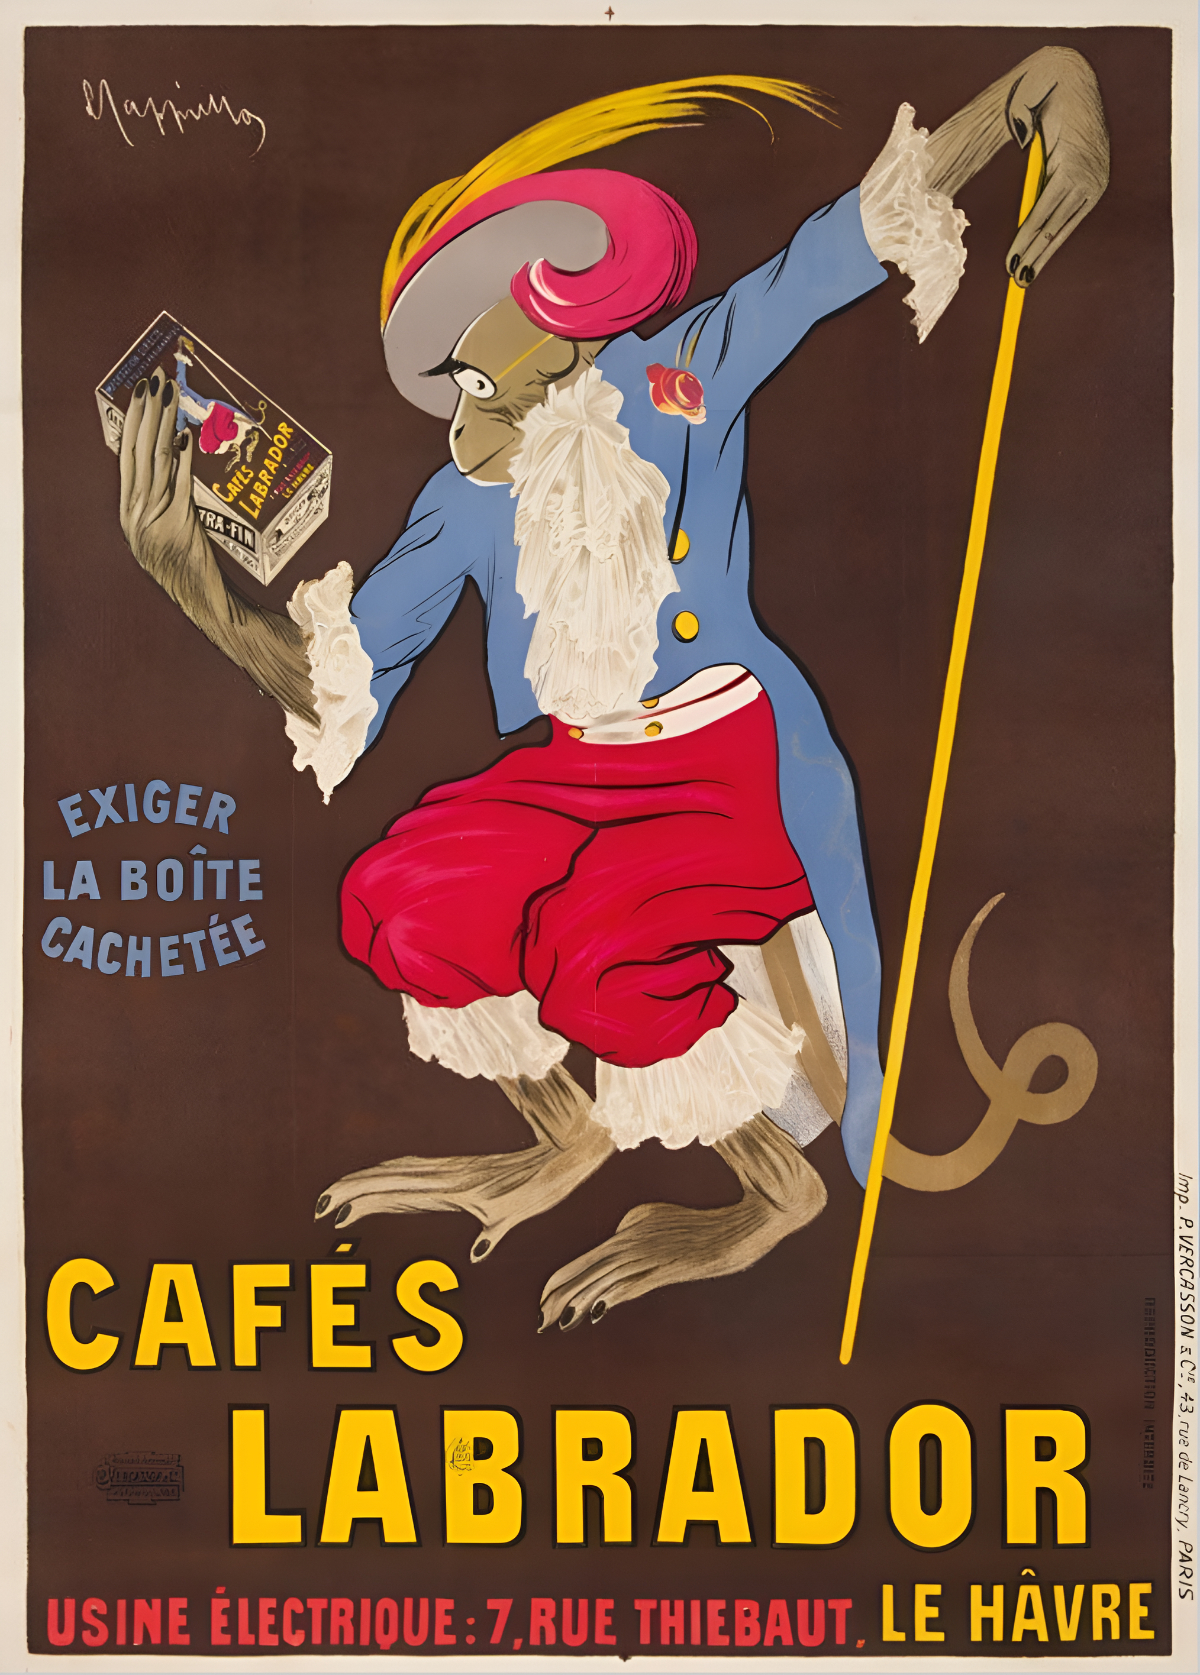 Cafés Labrador advertising poster